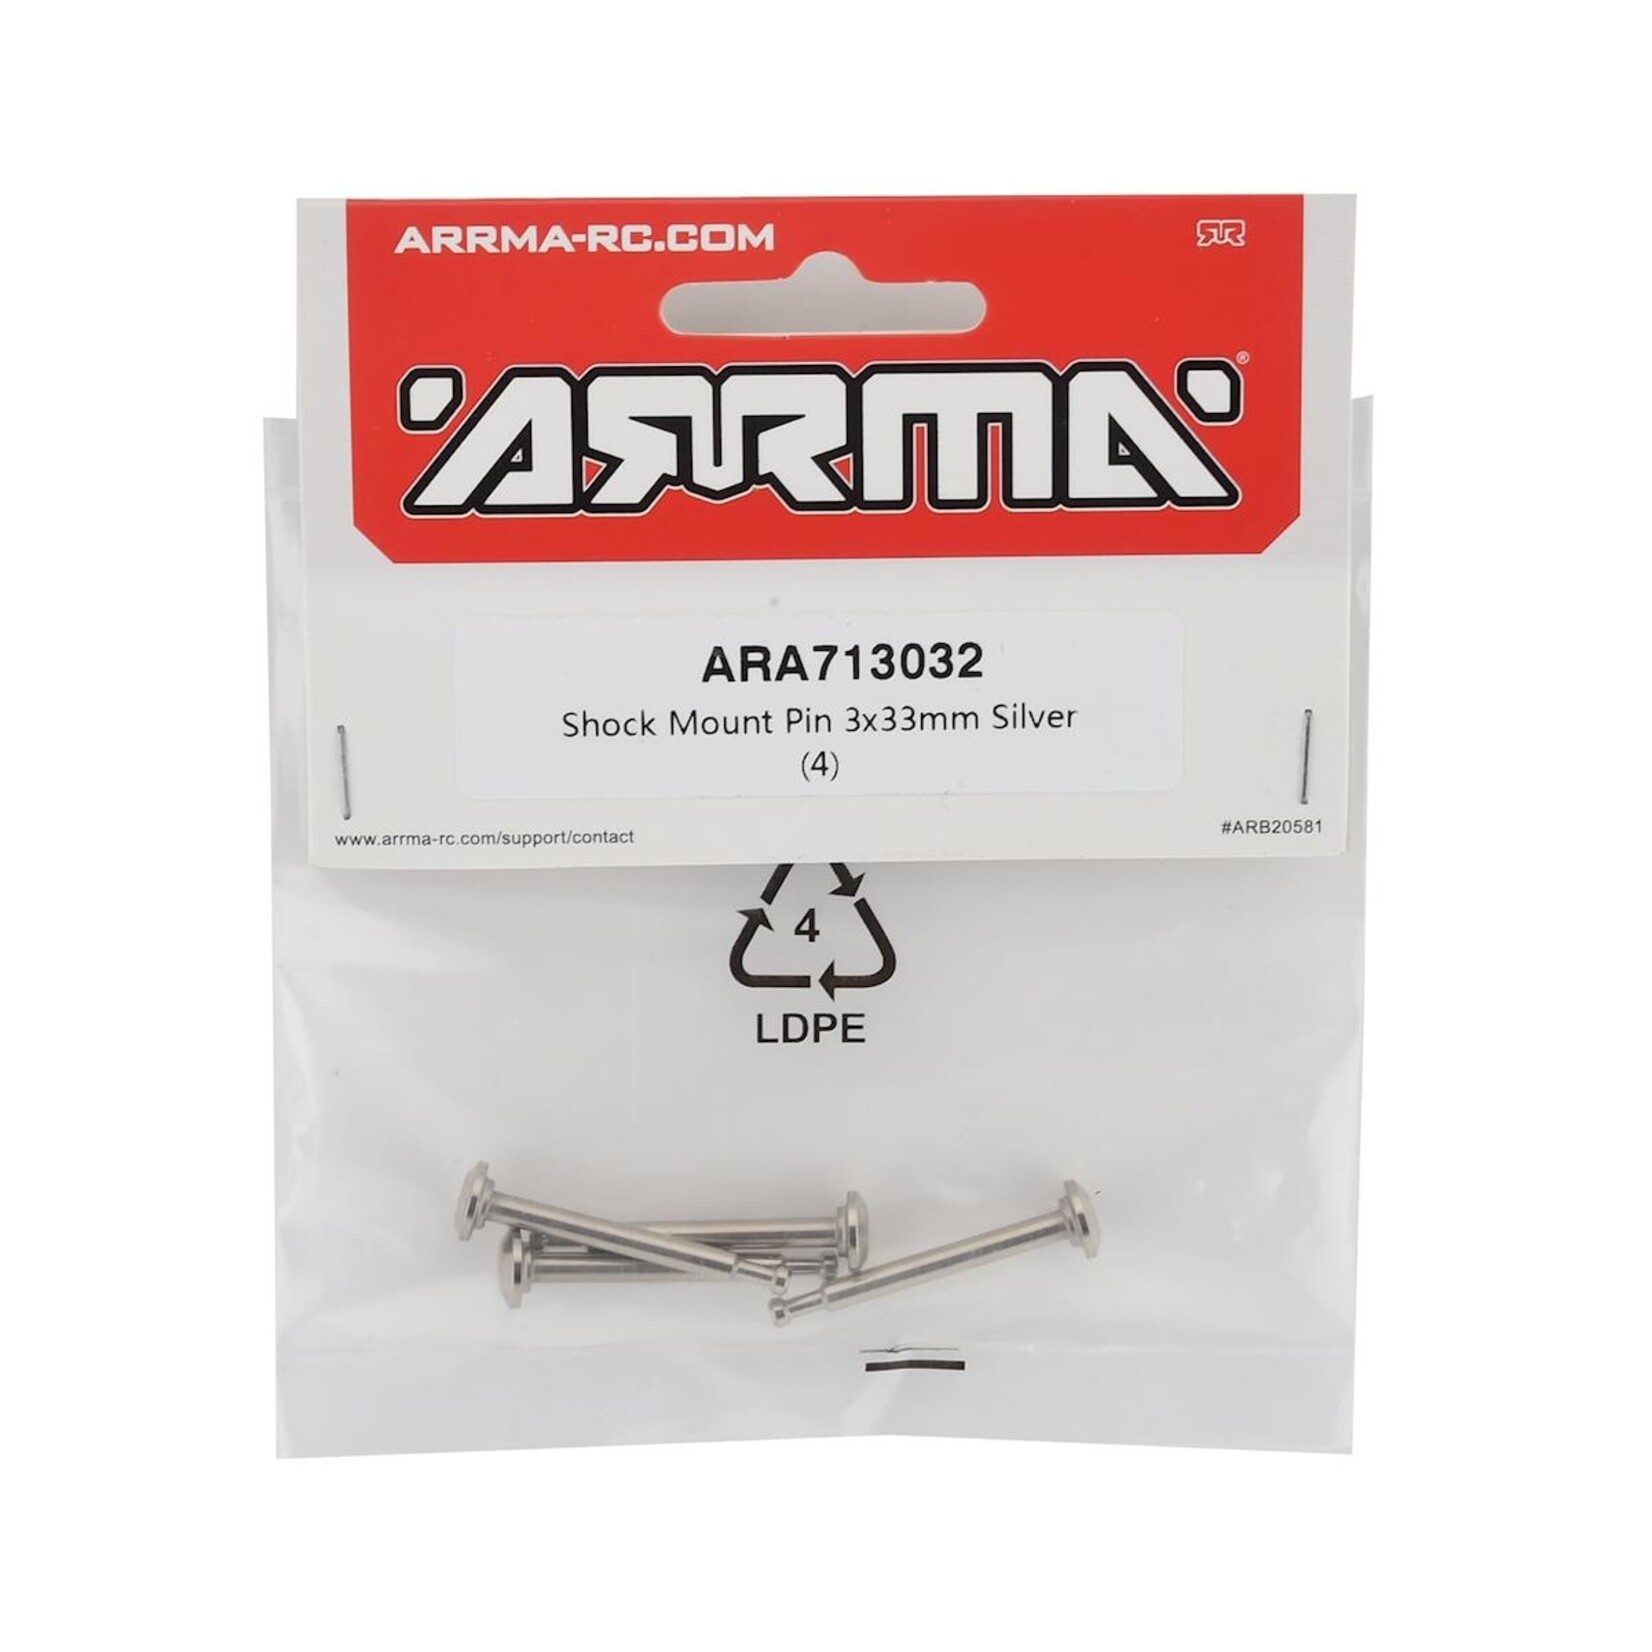 ARRMA Arrma Kraton EXB Shock Mount Pin (4) #AR713032